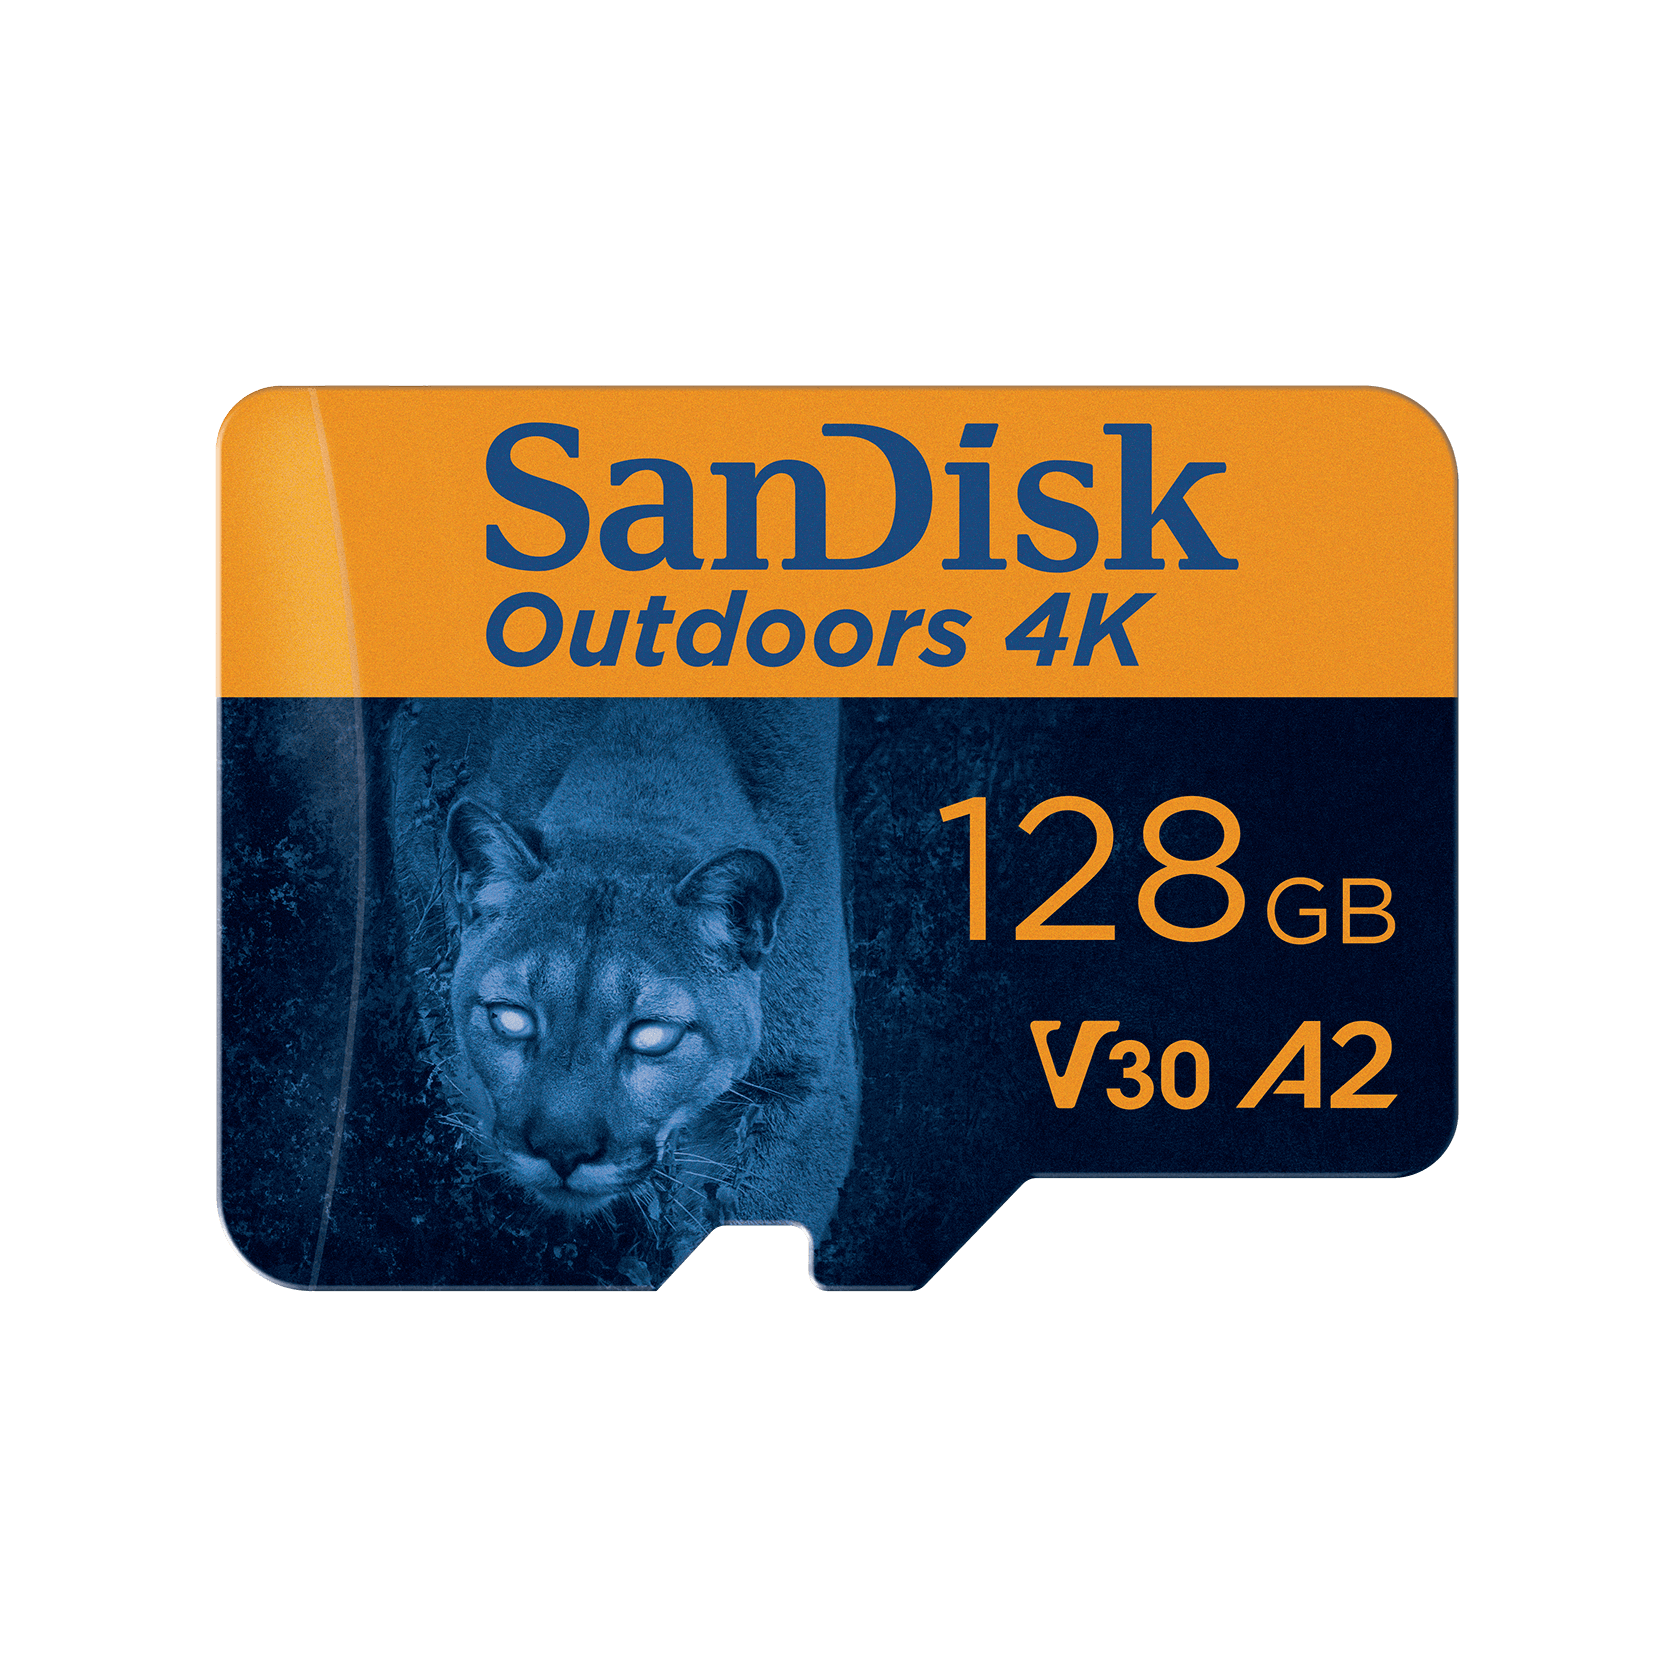 SanDisk Outdoors 4K MicroSDXC UHS-I Card with SD Adapter - 128GB MicroSD Card - SDSQXAA-128G-GN6VA